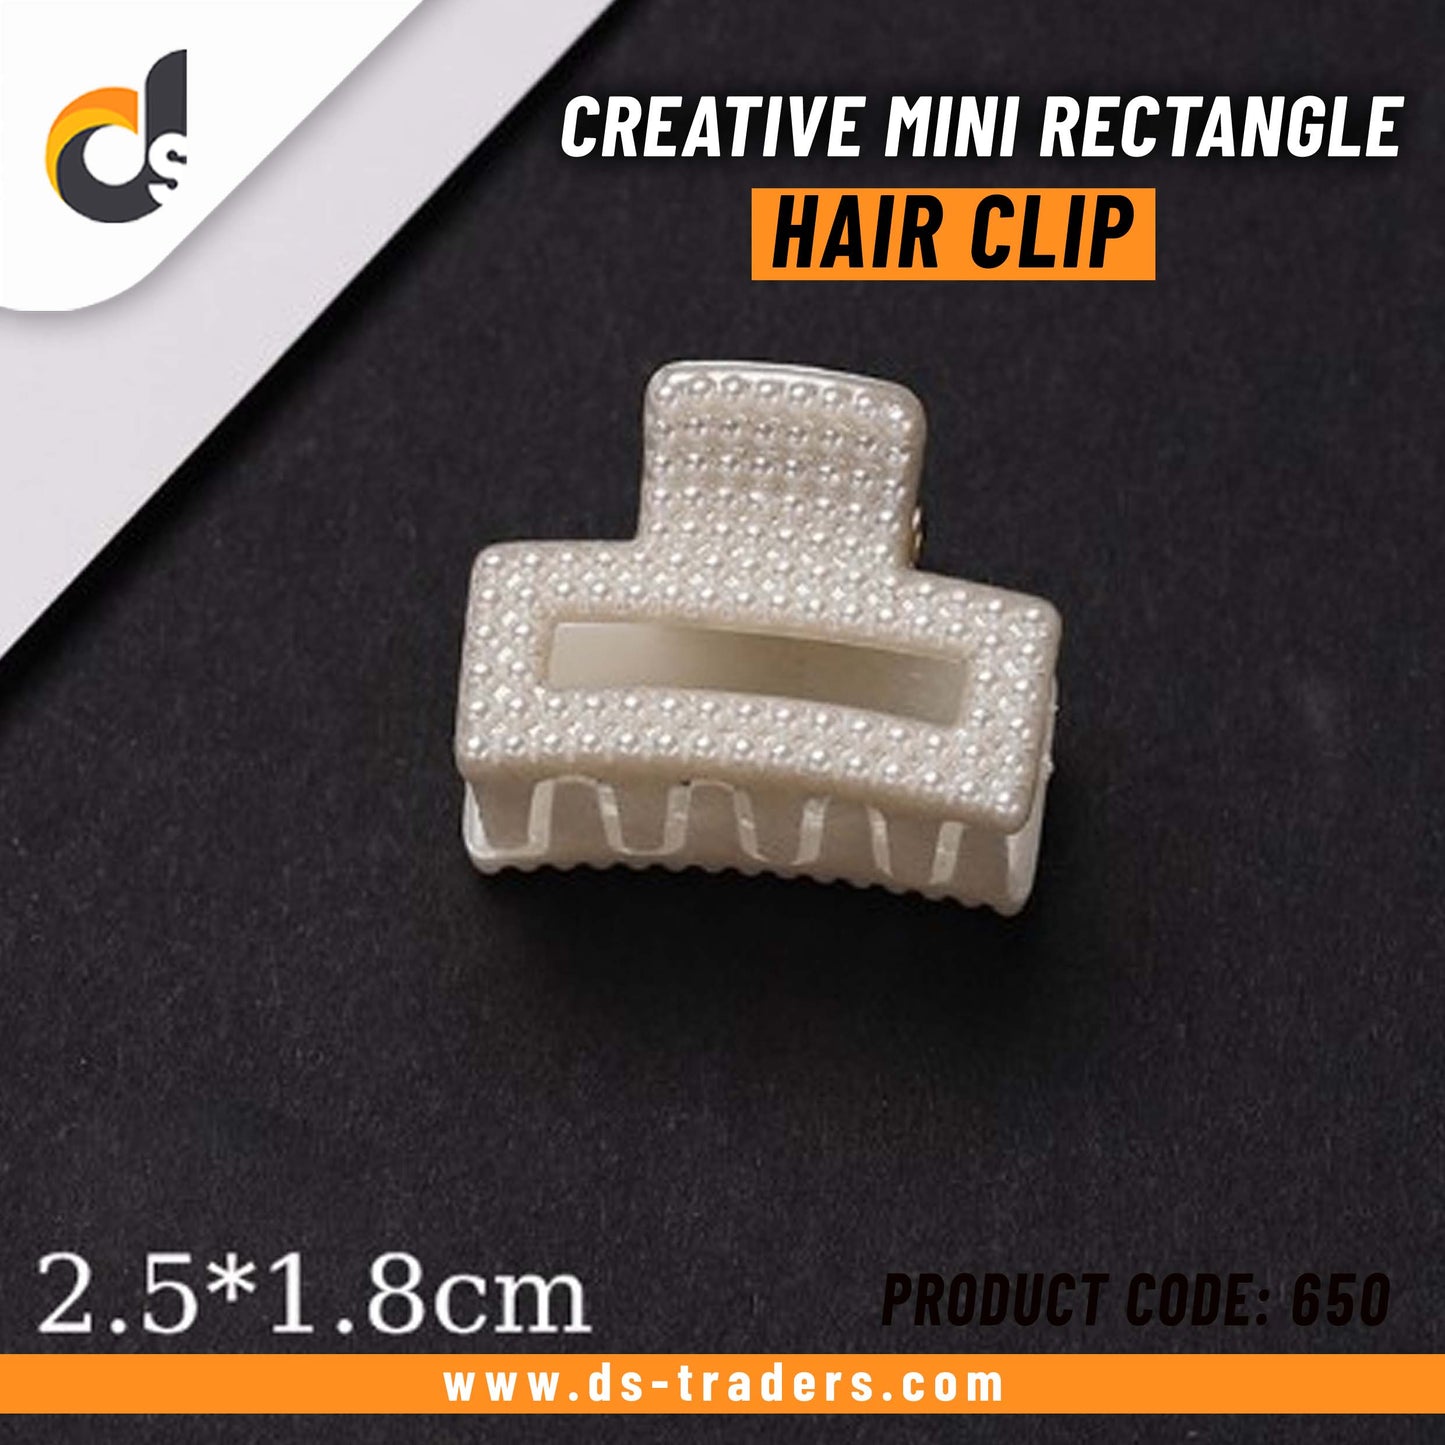 Creative Mini Rectangle Hair Clip